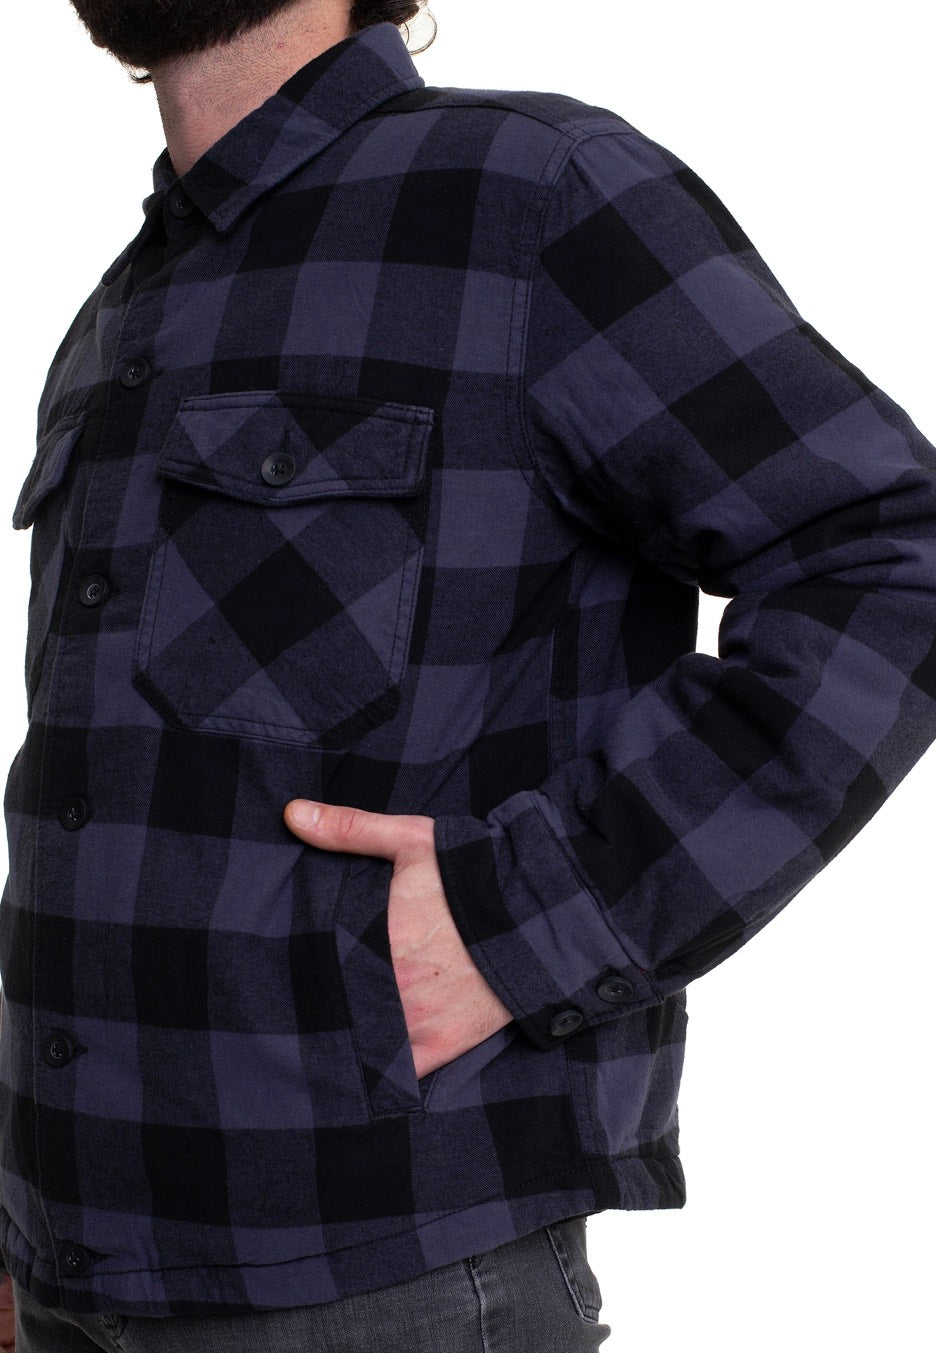 Brandit - Lumberjacket Black/Grey - Jacket